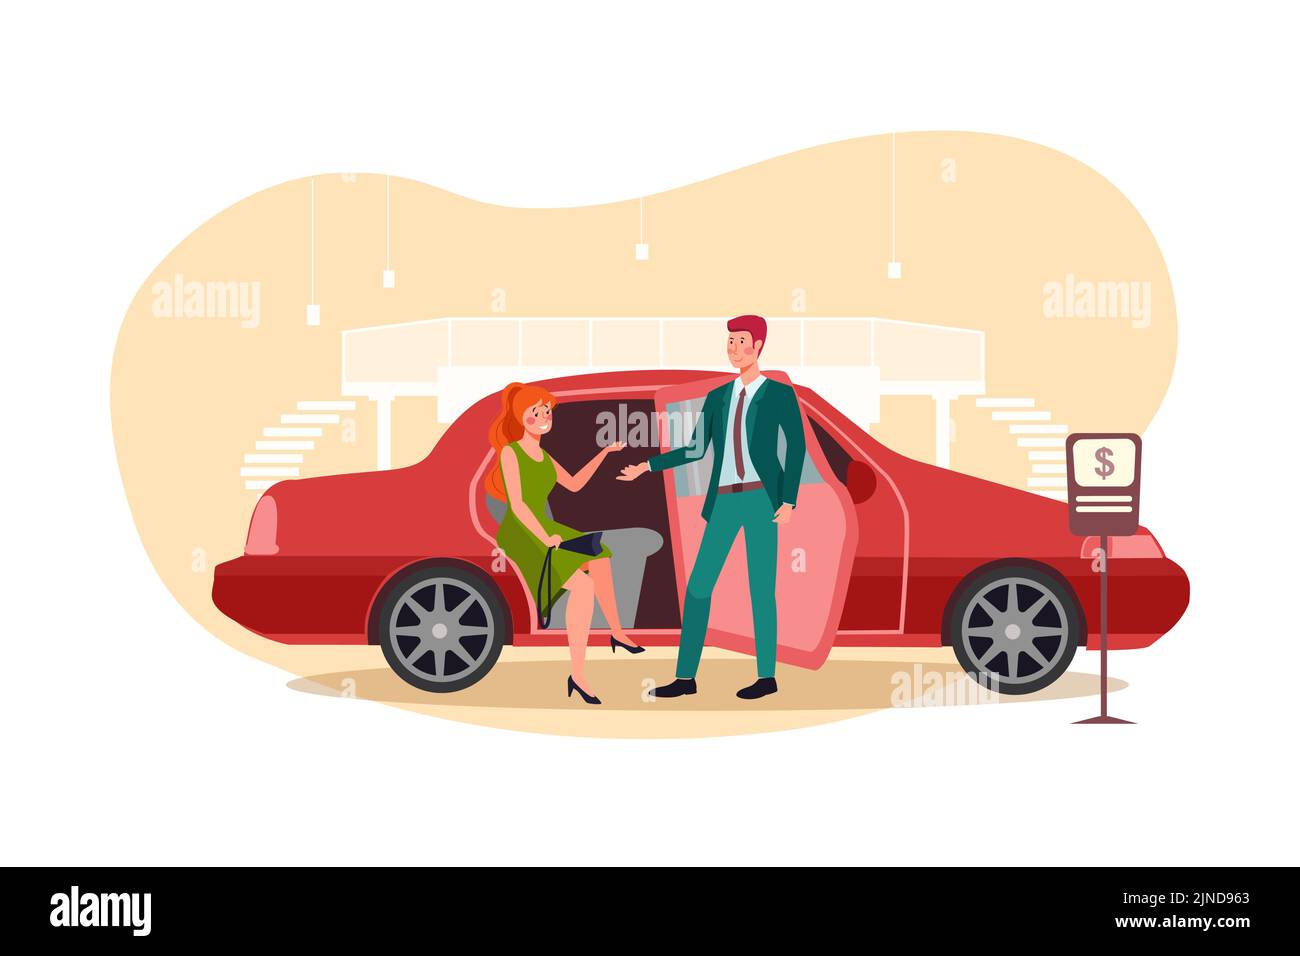 Car Dealership Illustration concept. Flat illustration isolated on white background Stock Vector